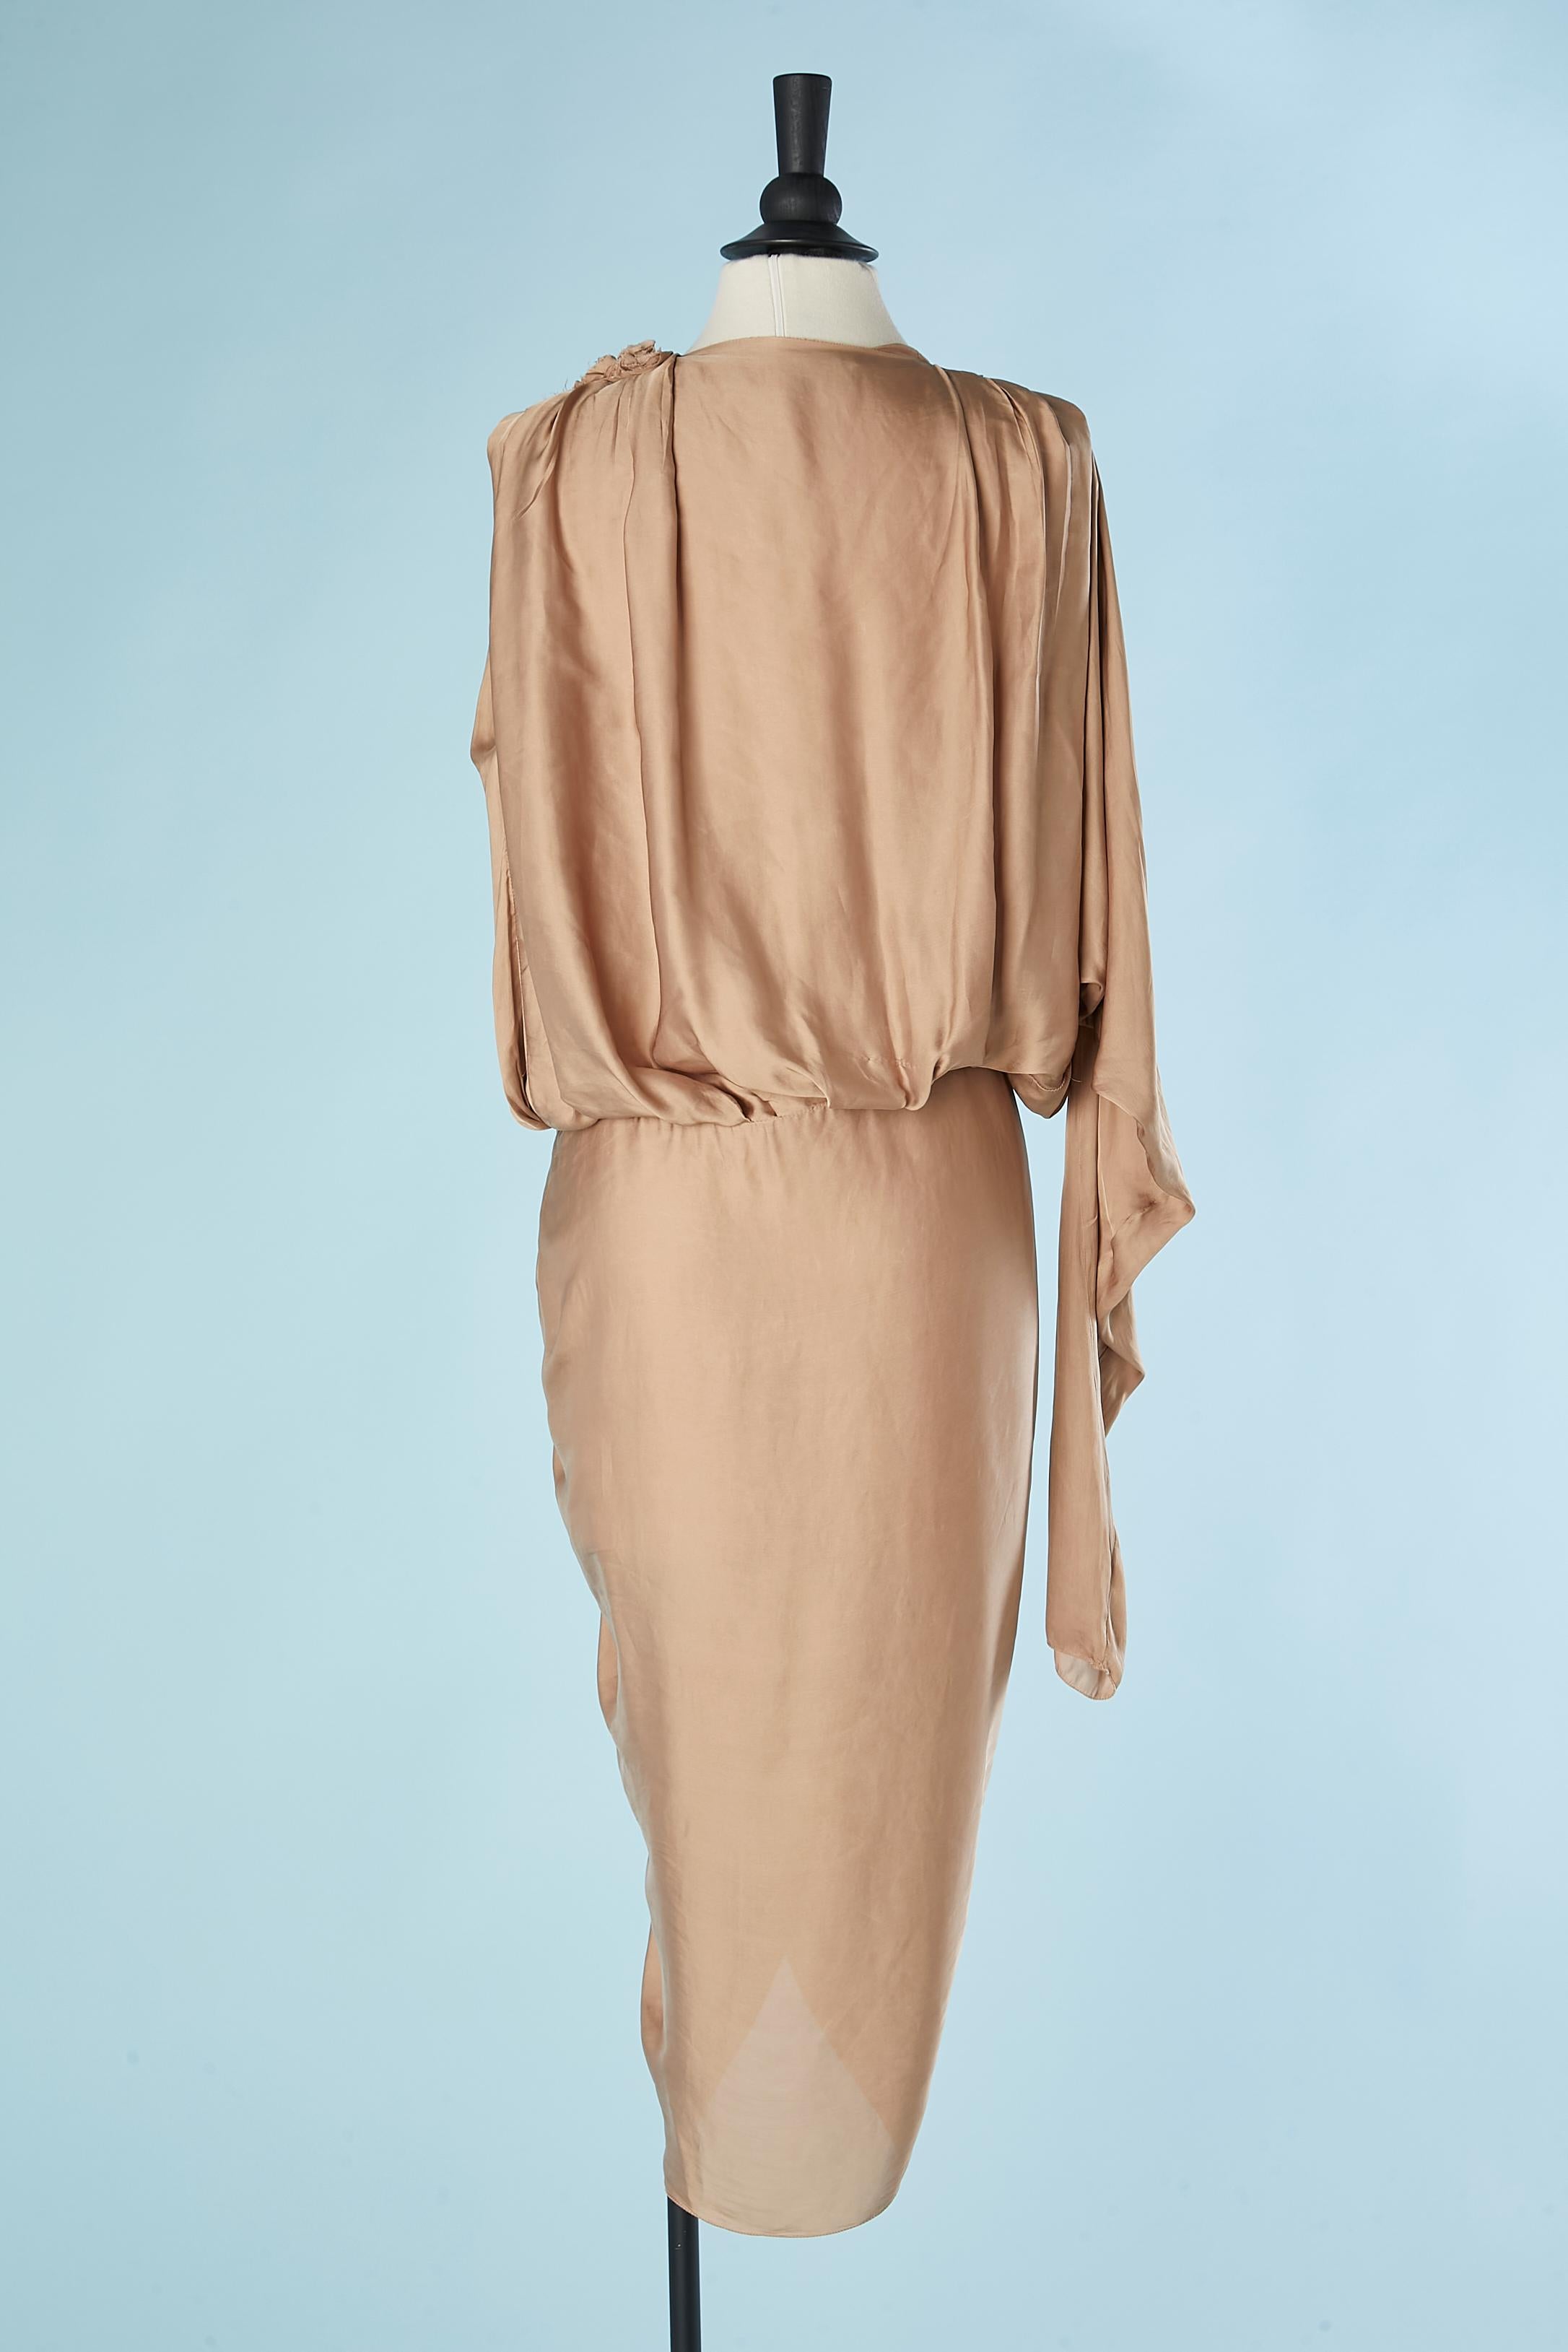 Beige asymmetrical and drape silky cocktail dress Lanvin by Alber Elbaz 1